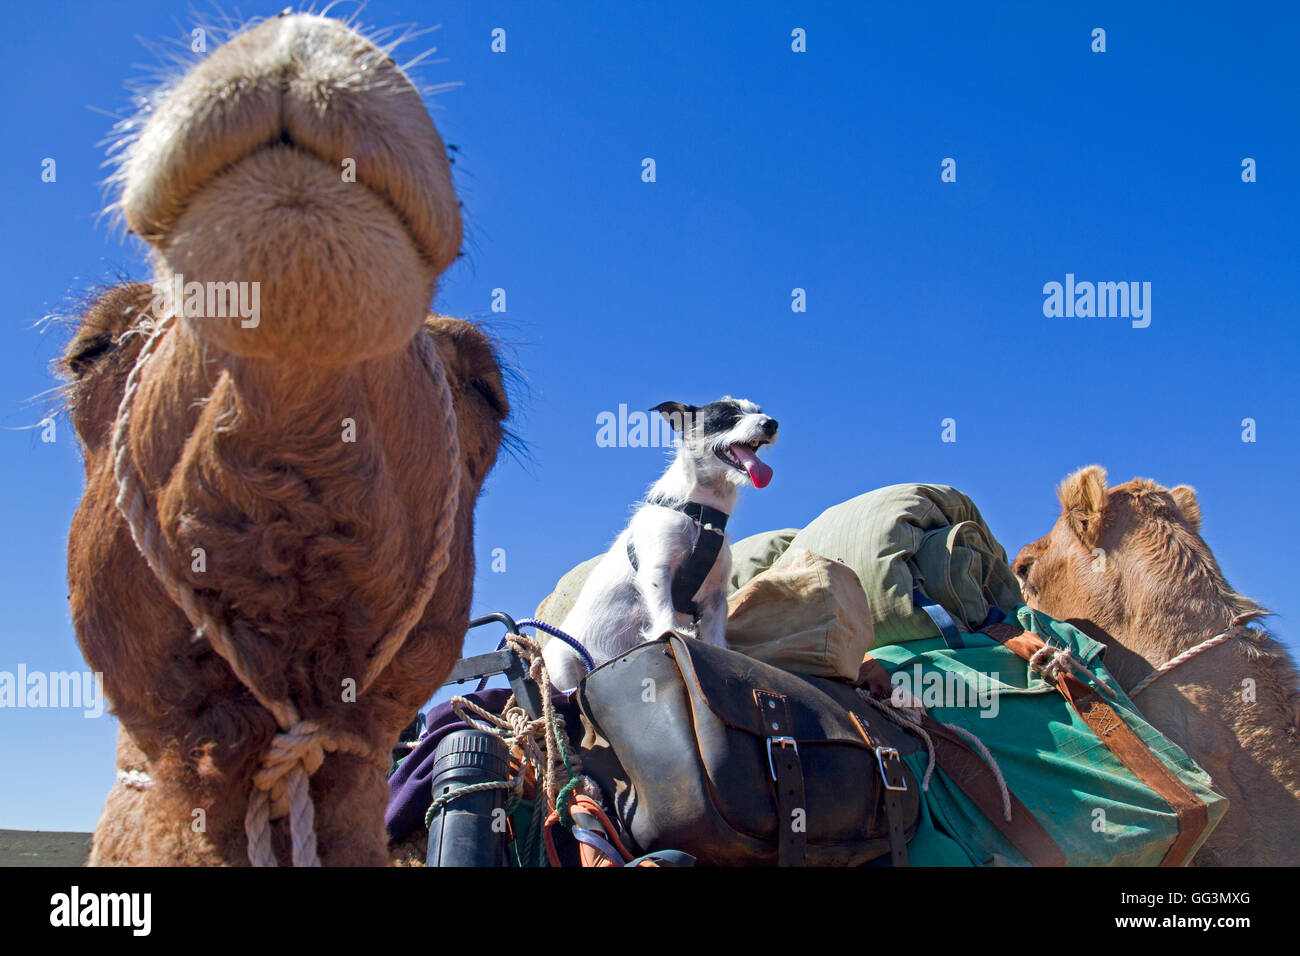 Camel and dog Stock Photo